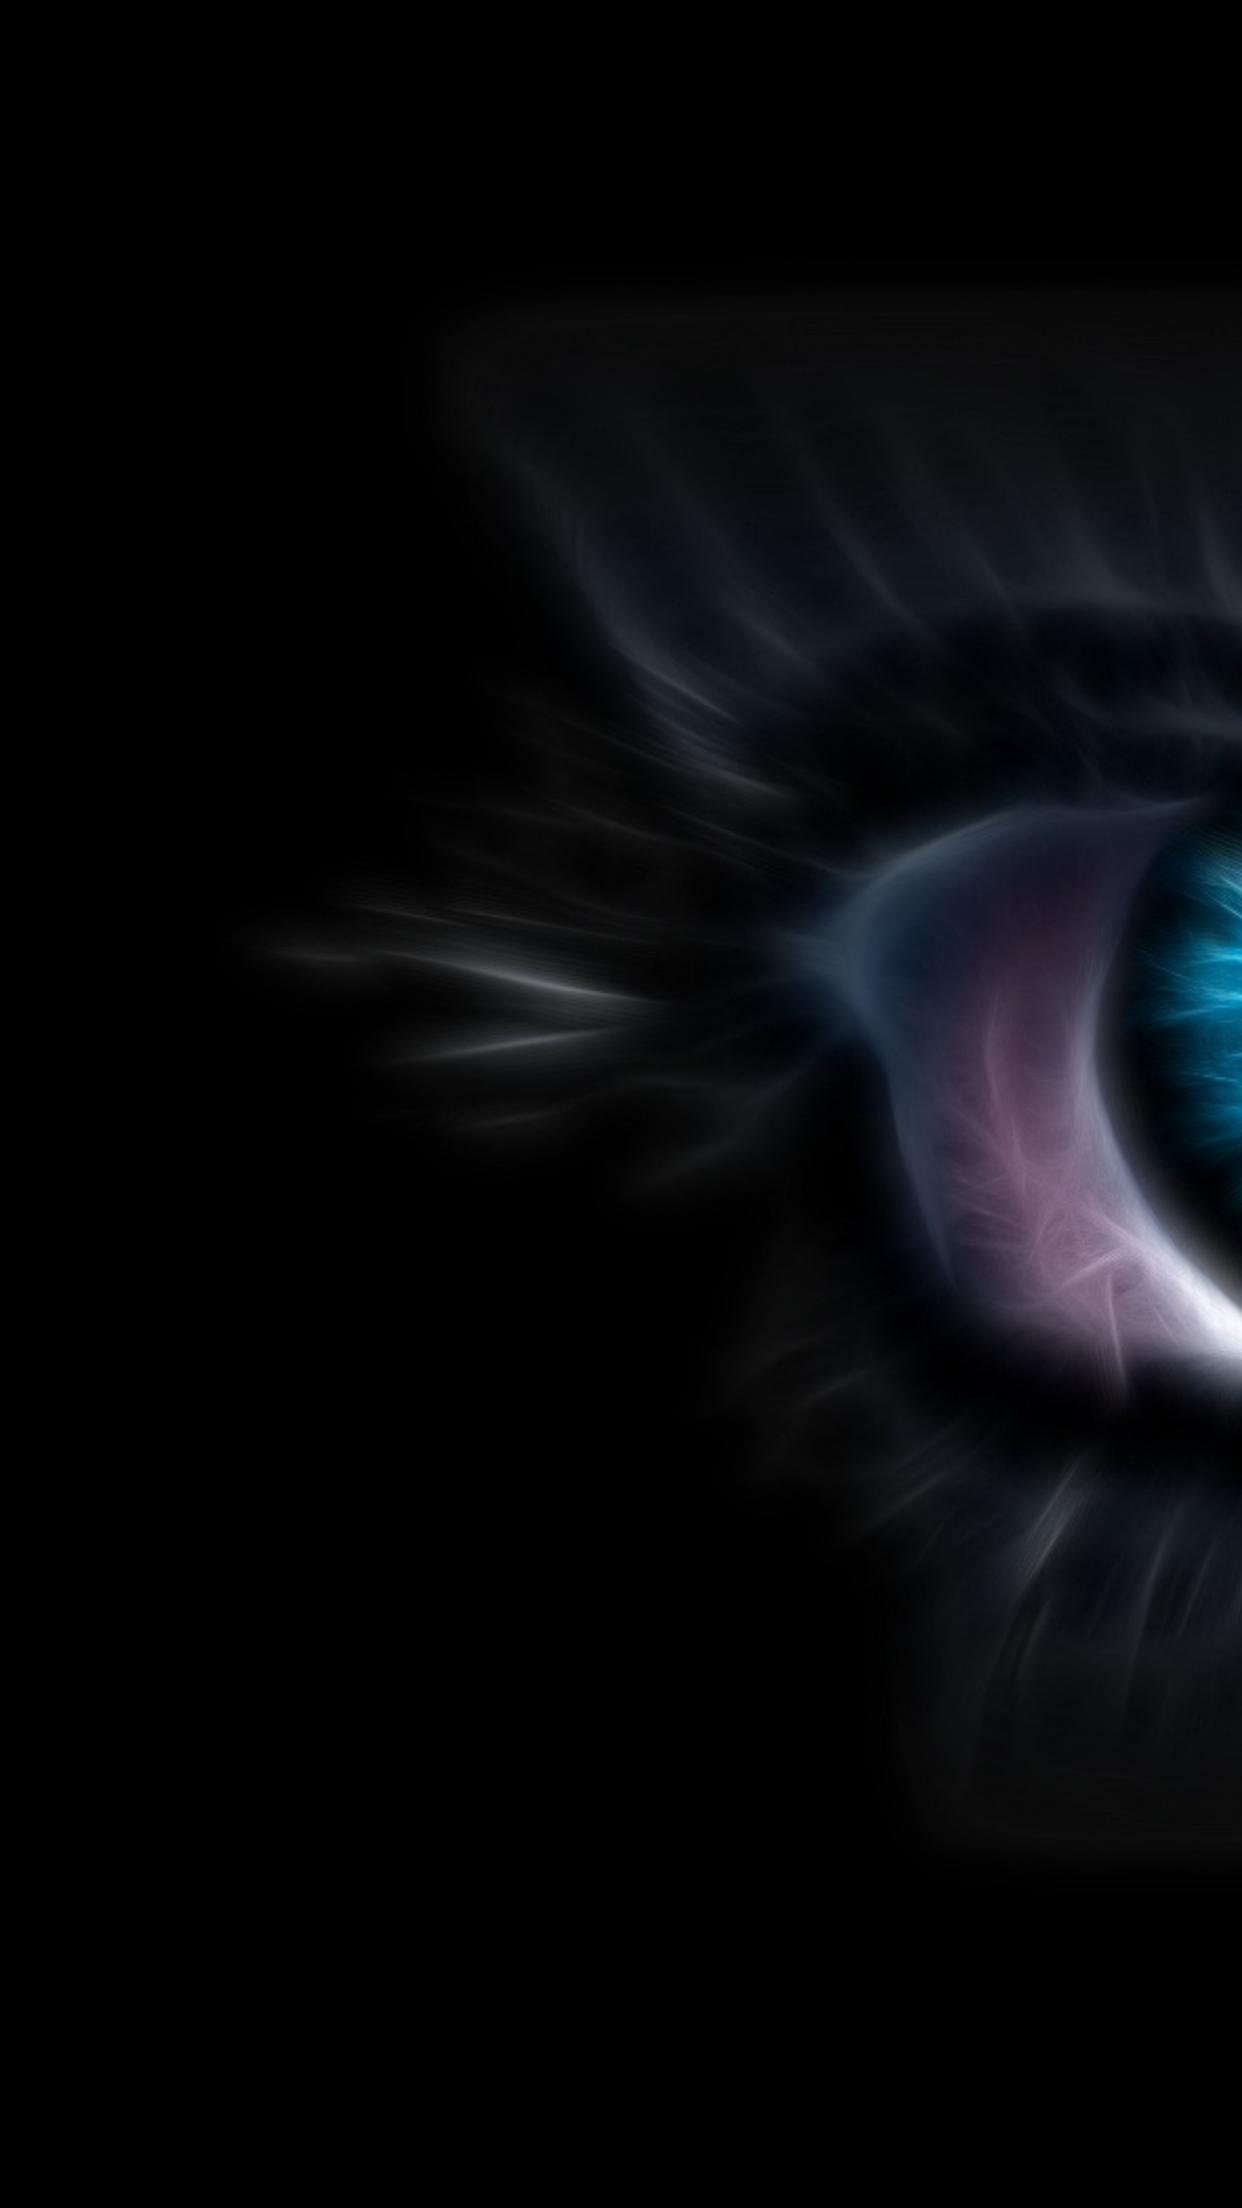 Wonderful blue cat eye - HD dark wallpaper